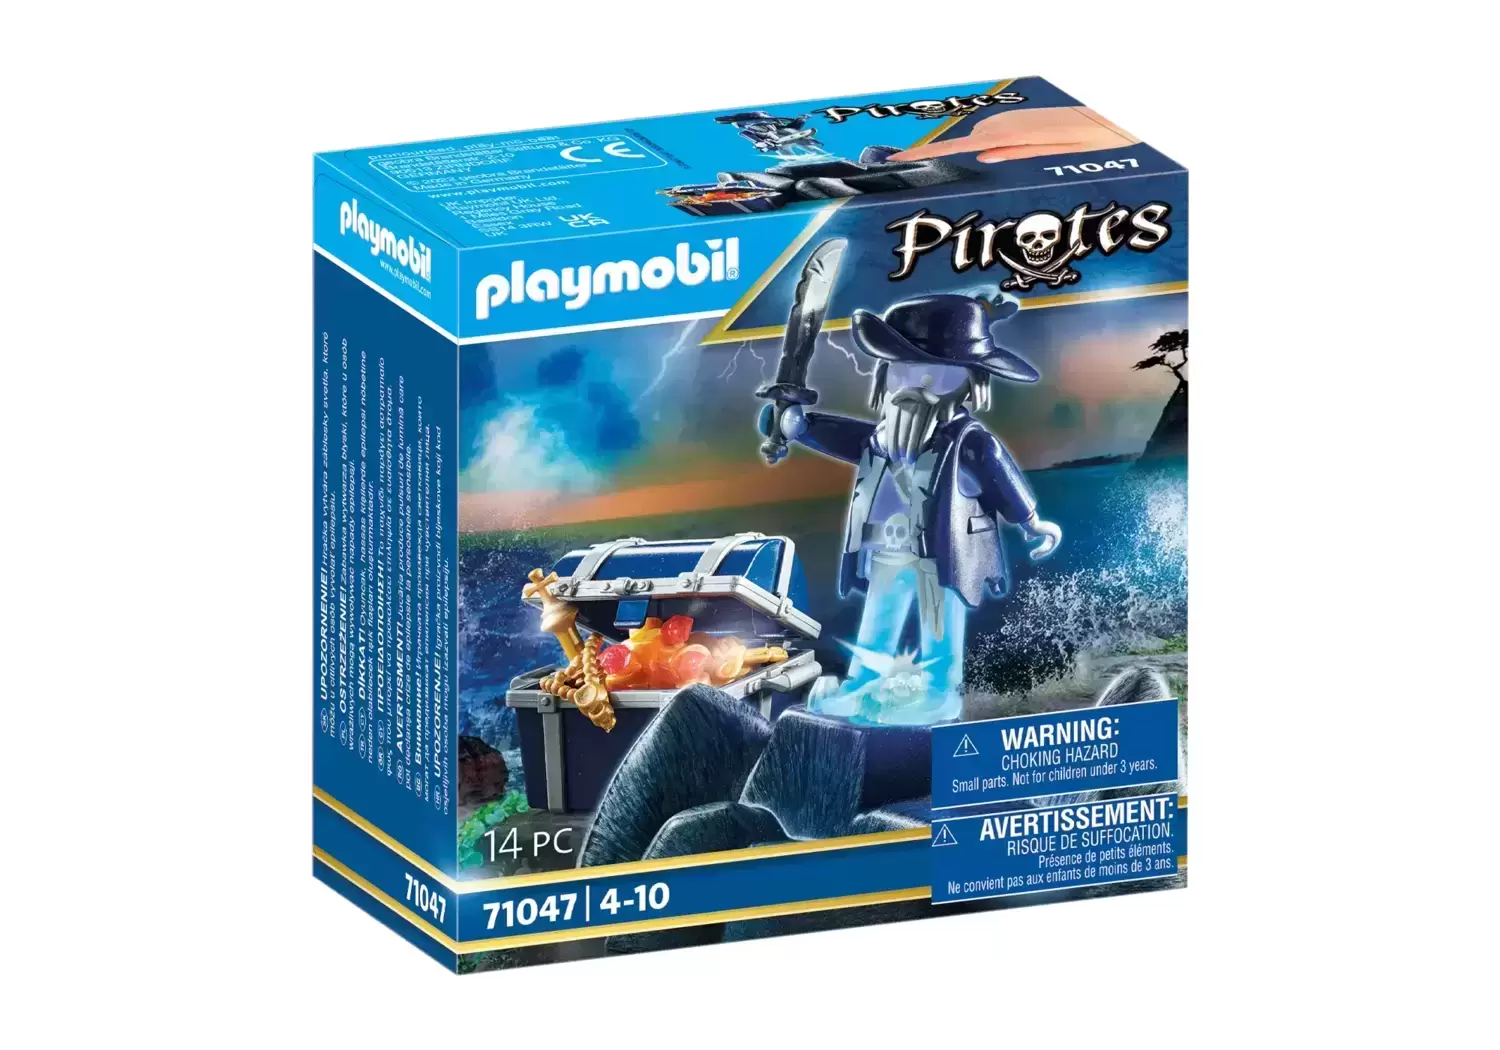 Pirate Playmobil - Pirate treasure with guardian